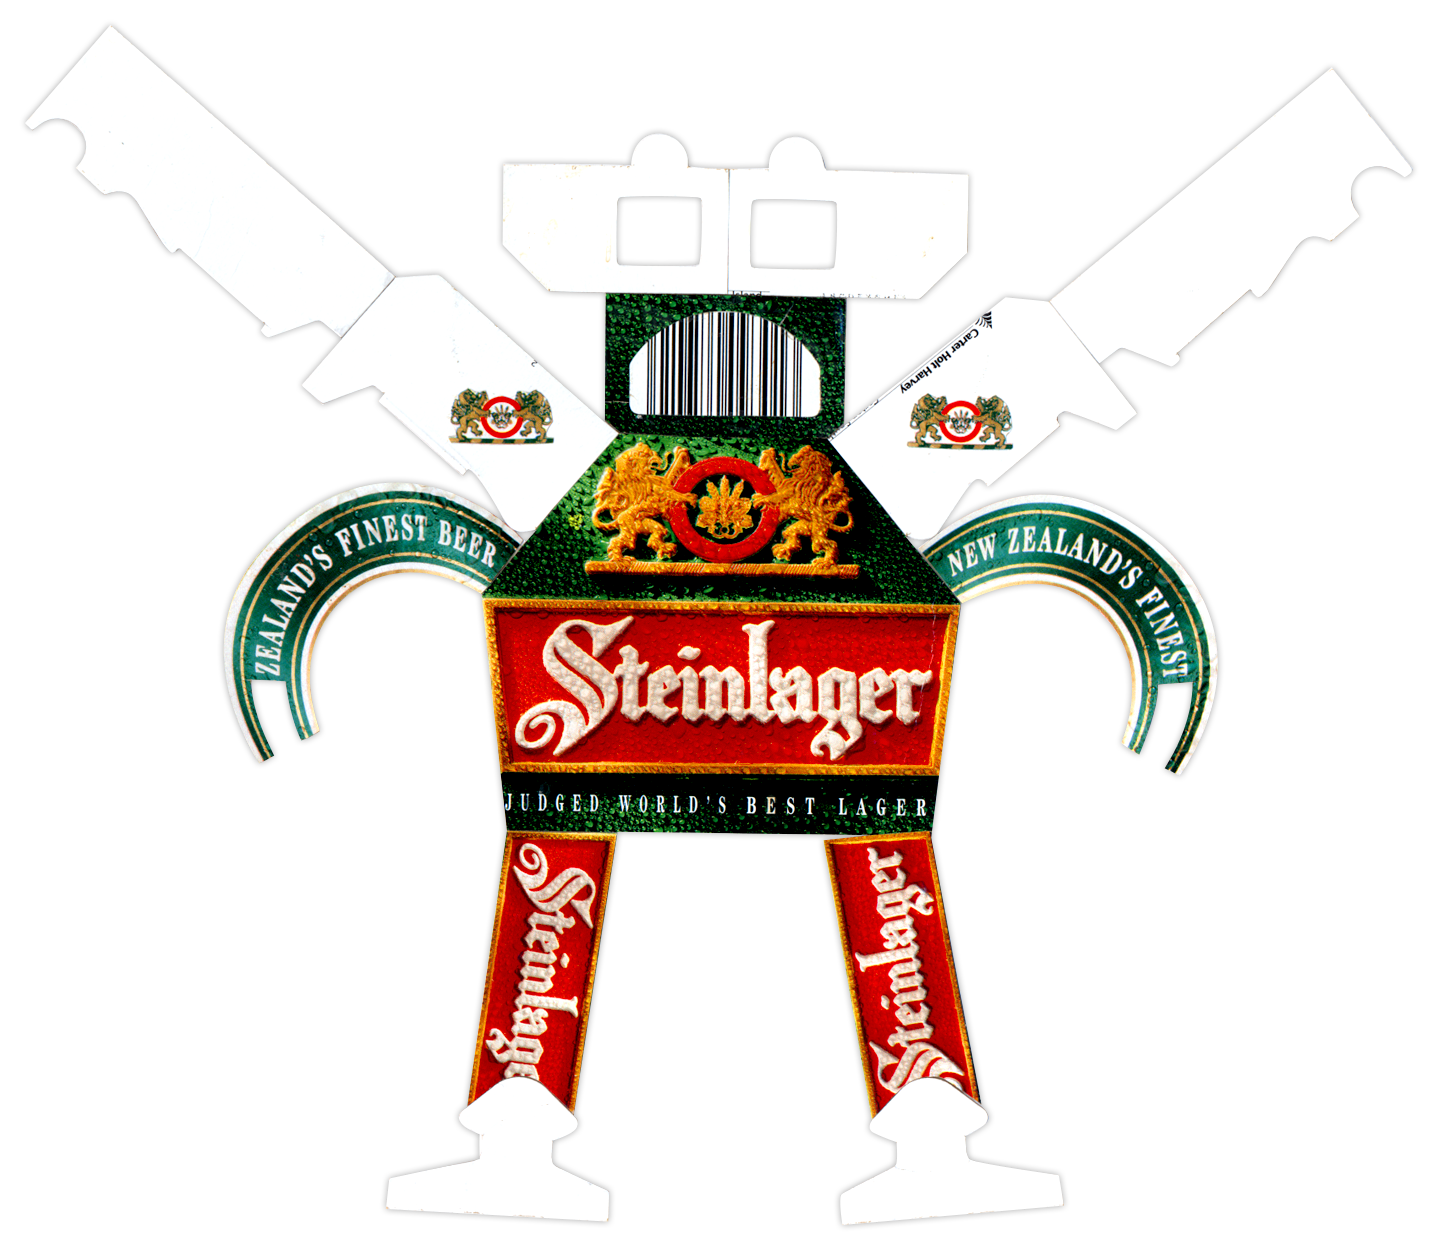 Steinlager Beer BoxBot 